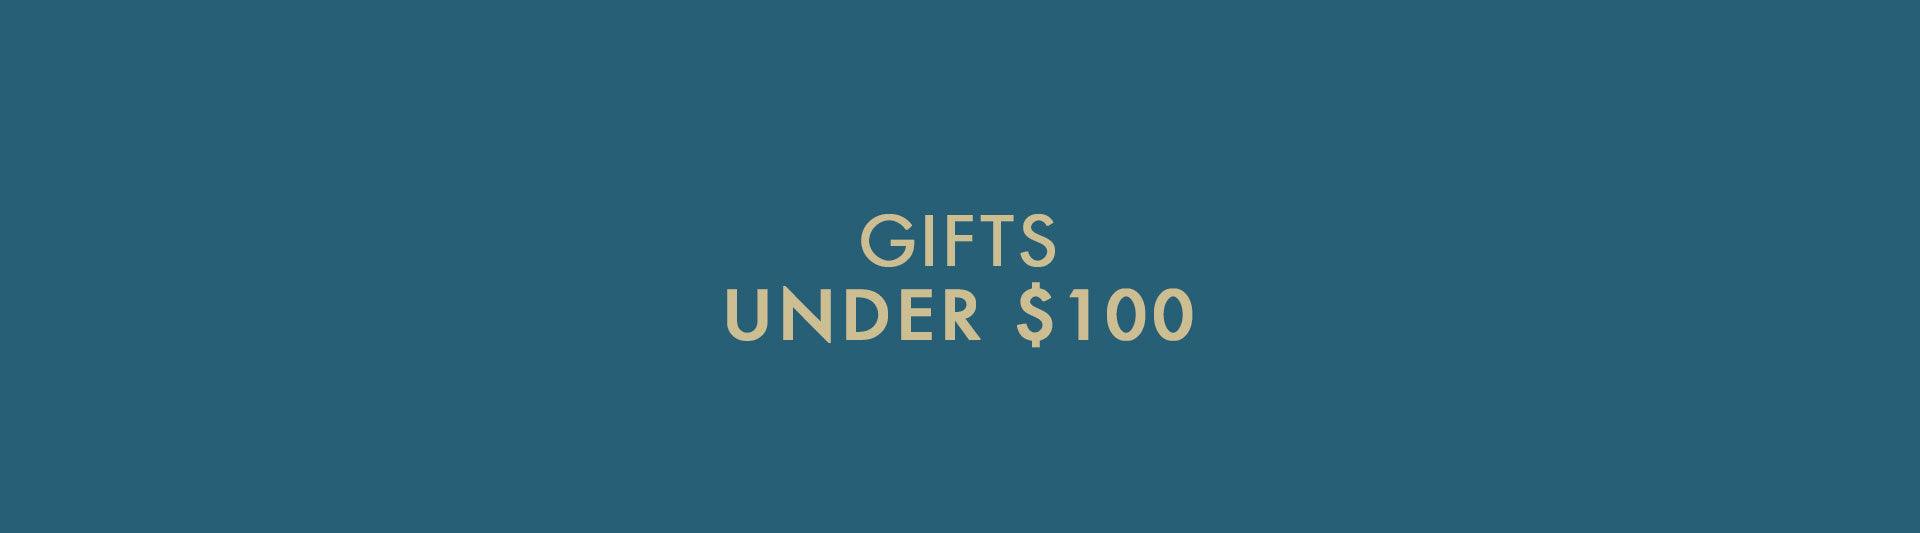 Yoga Gifts Under $100 - Yoga Design Lab 